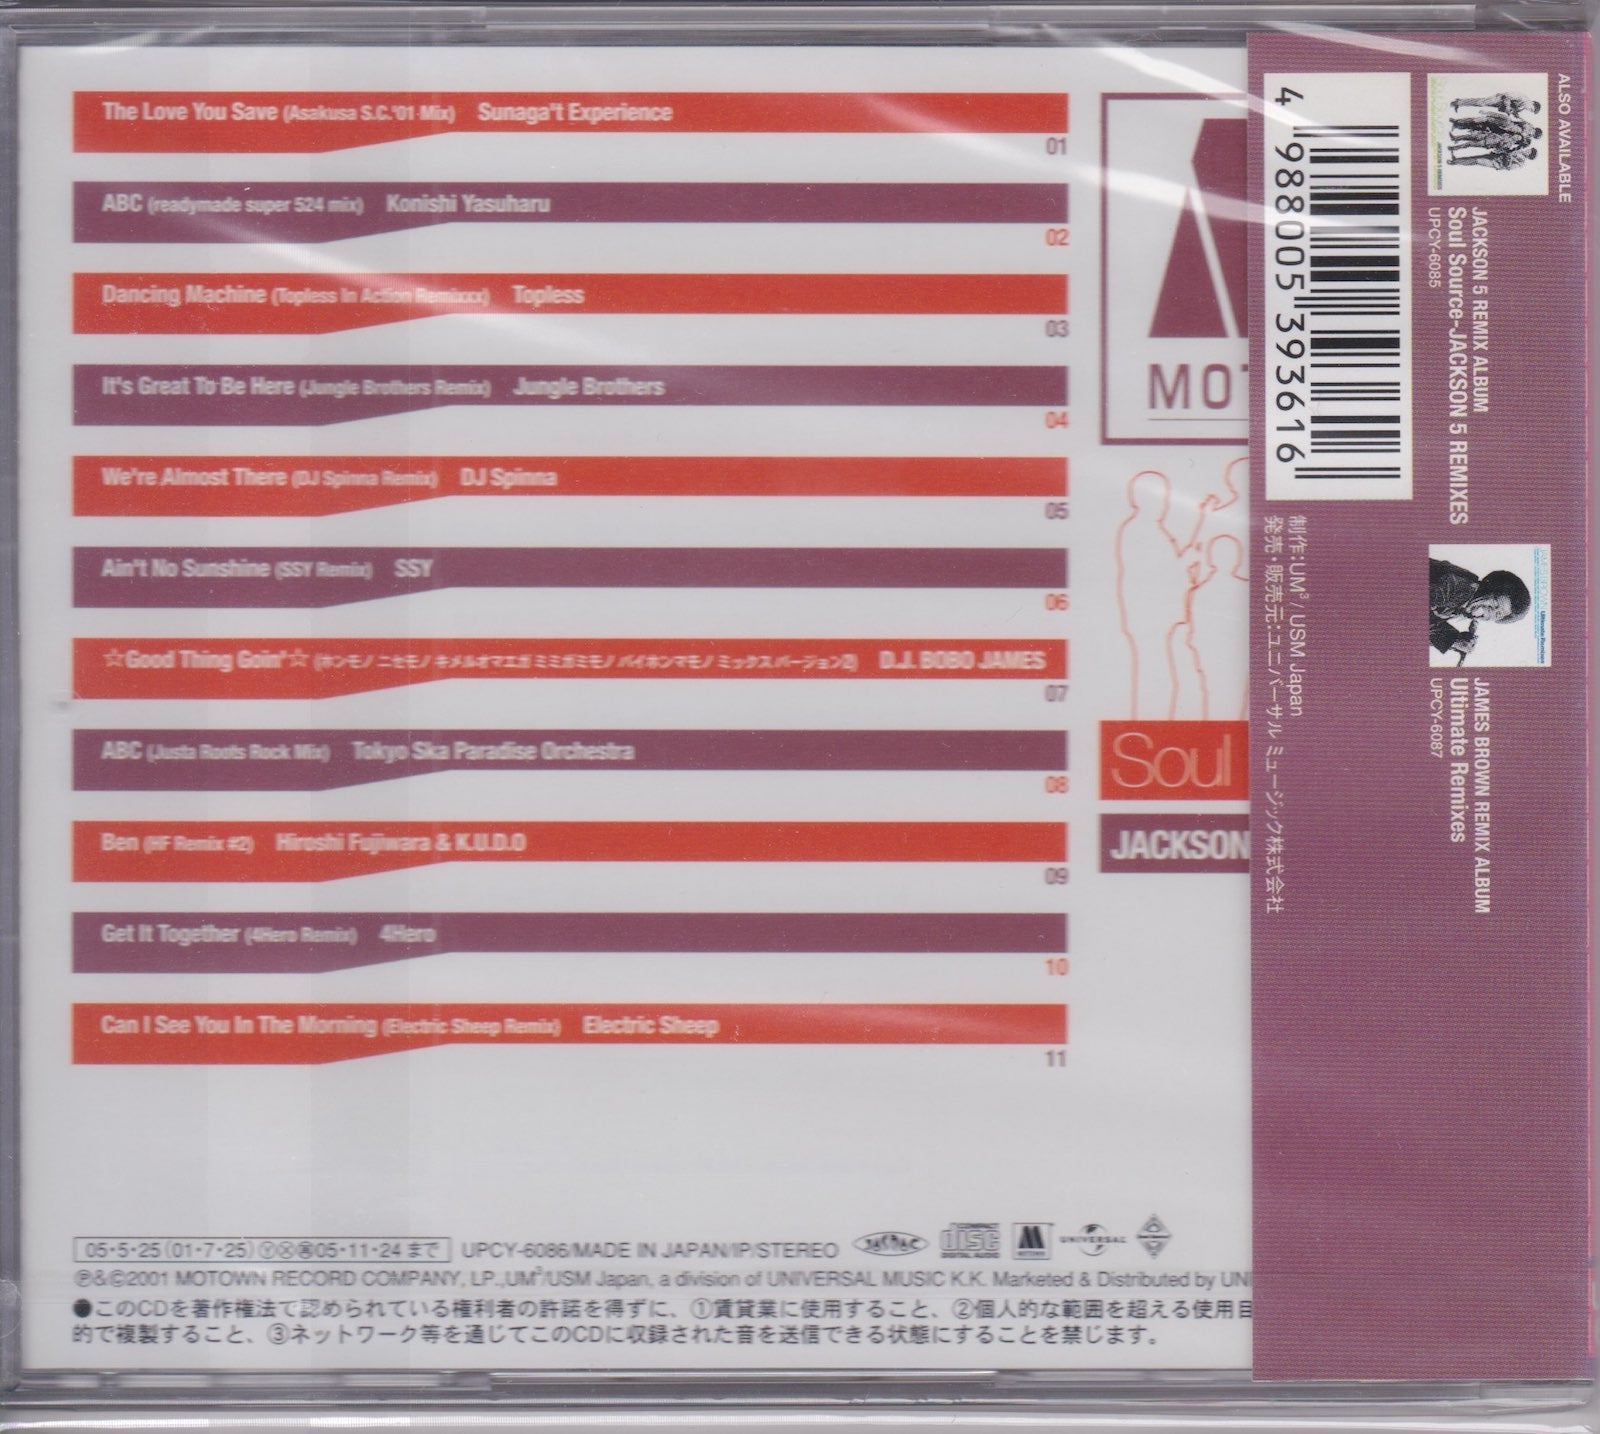 LP) Jackson 5 Remixes Soul Source [Motown]レコード2枚組,大沢伸一 